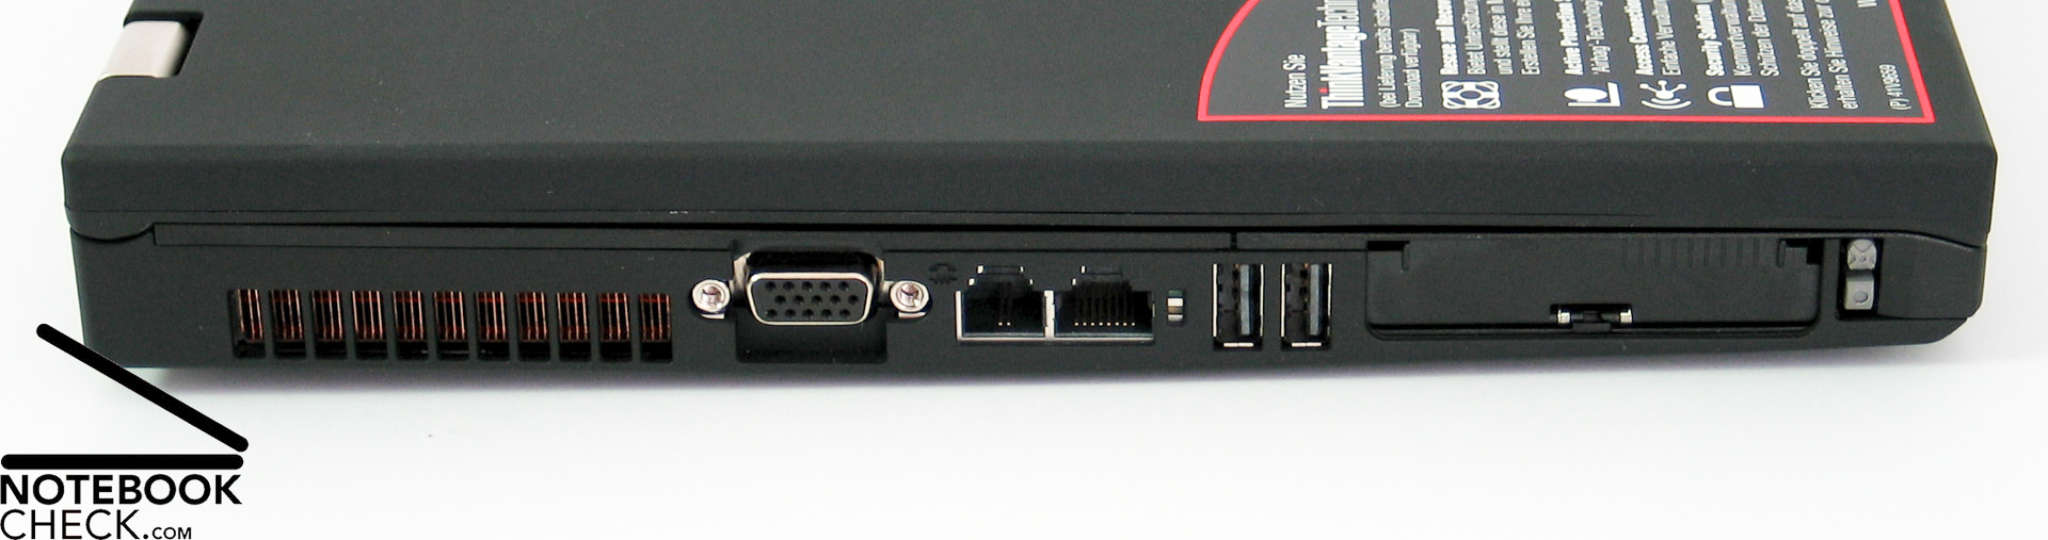 009 ThinkPad T61 ports.jpg